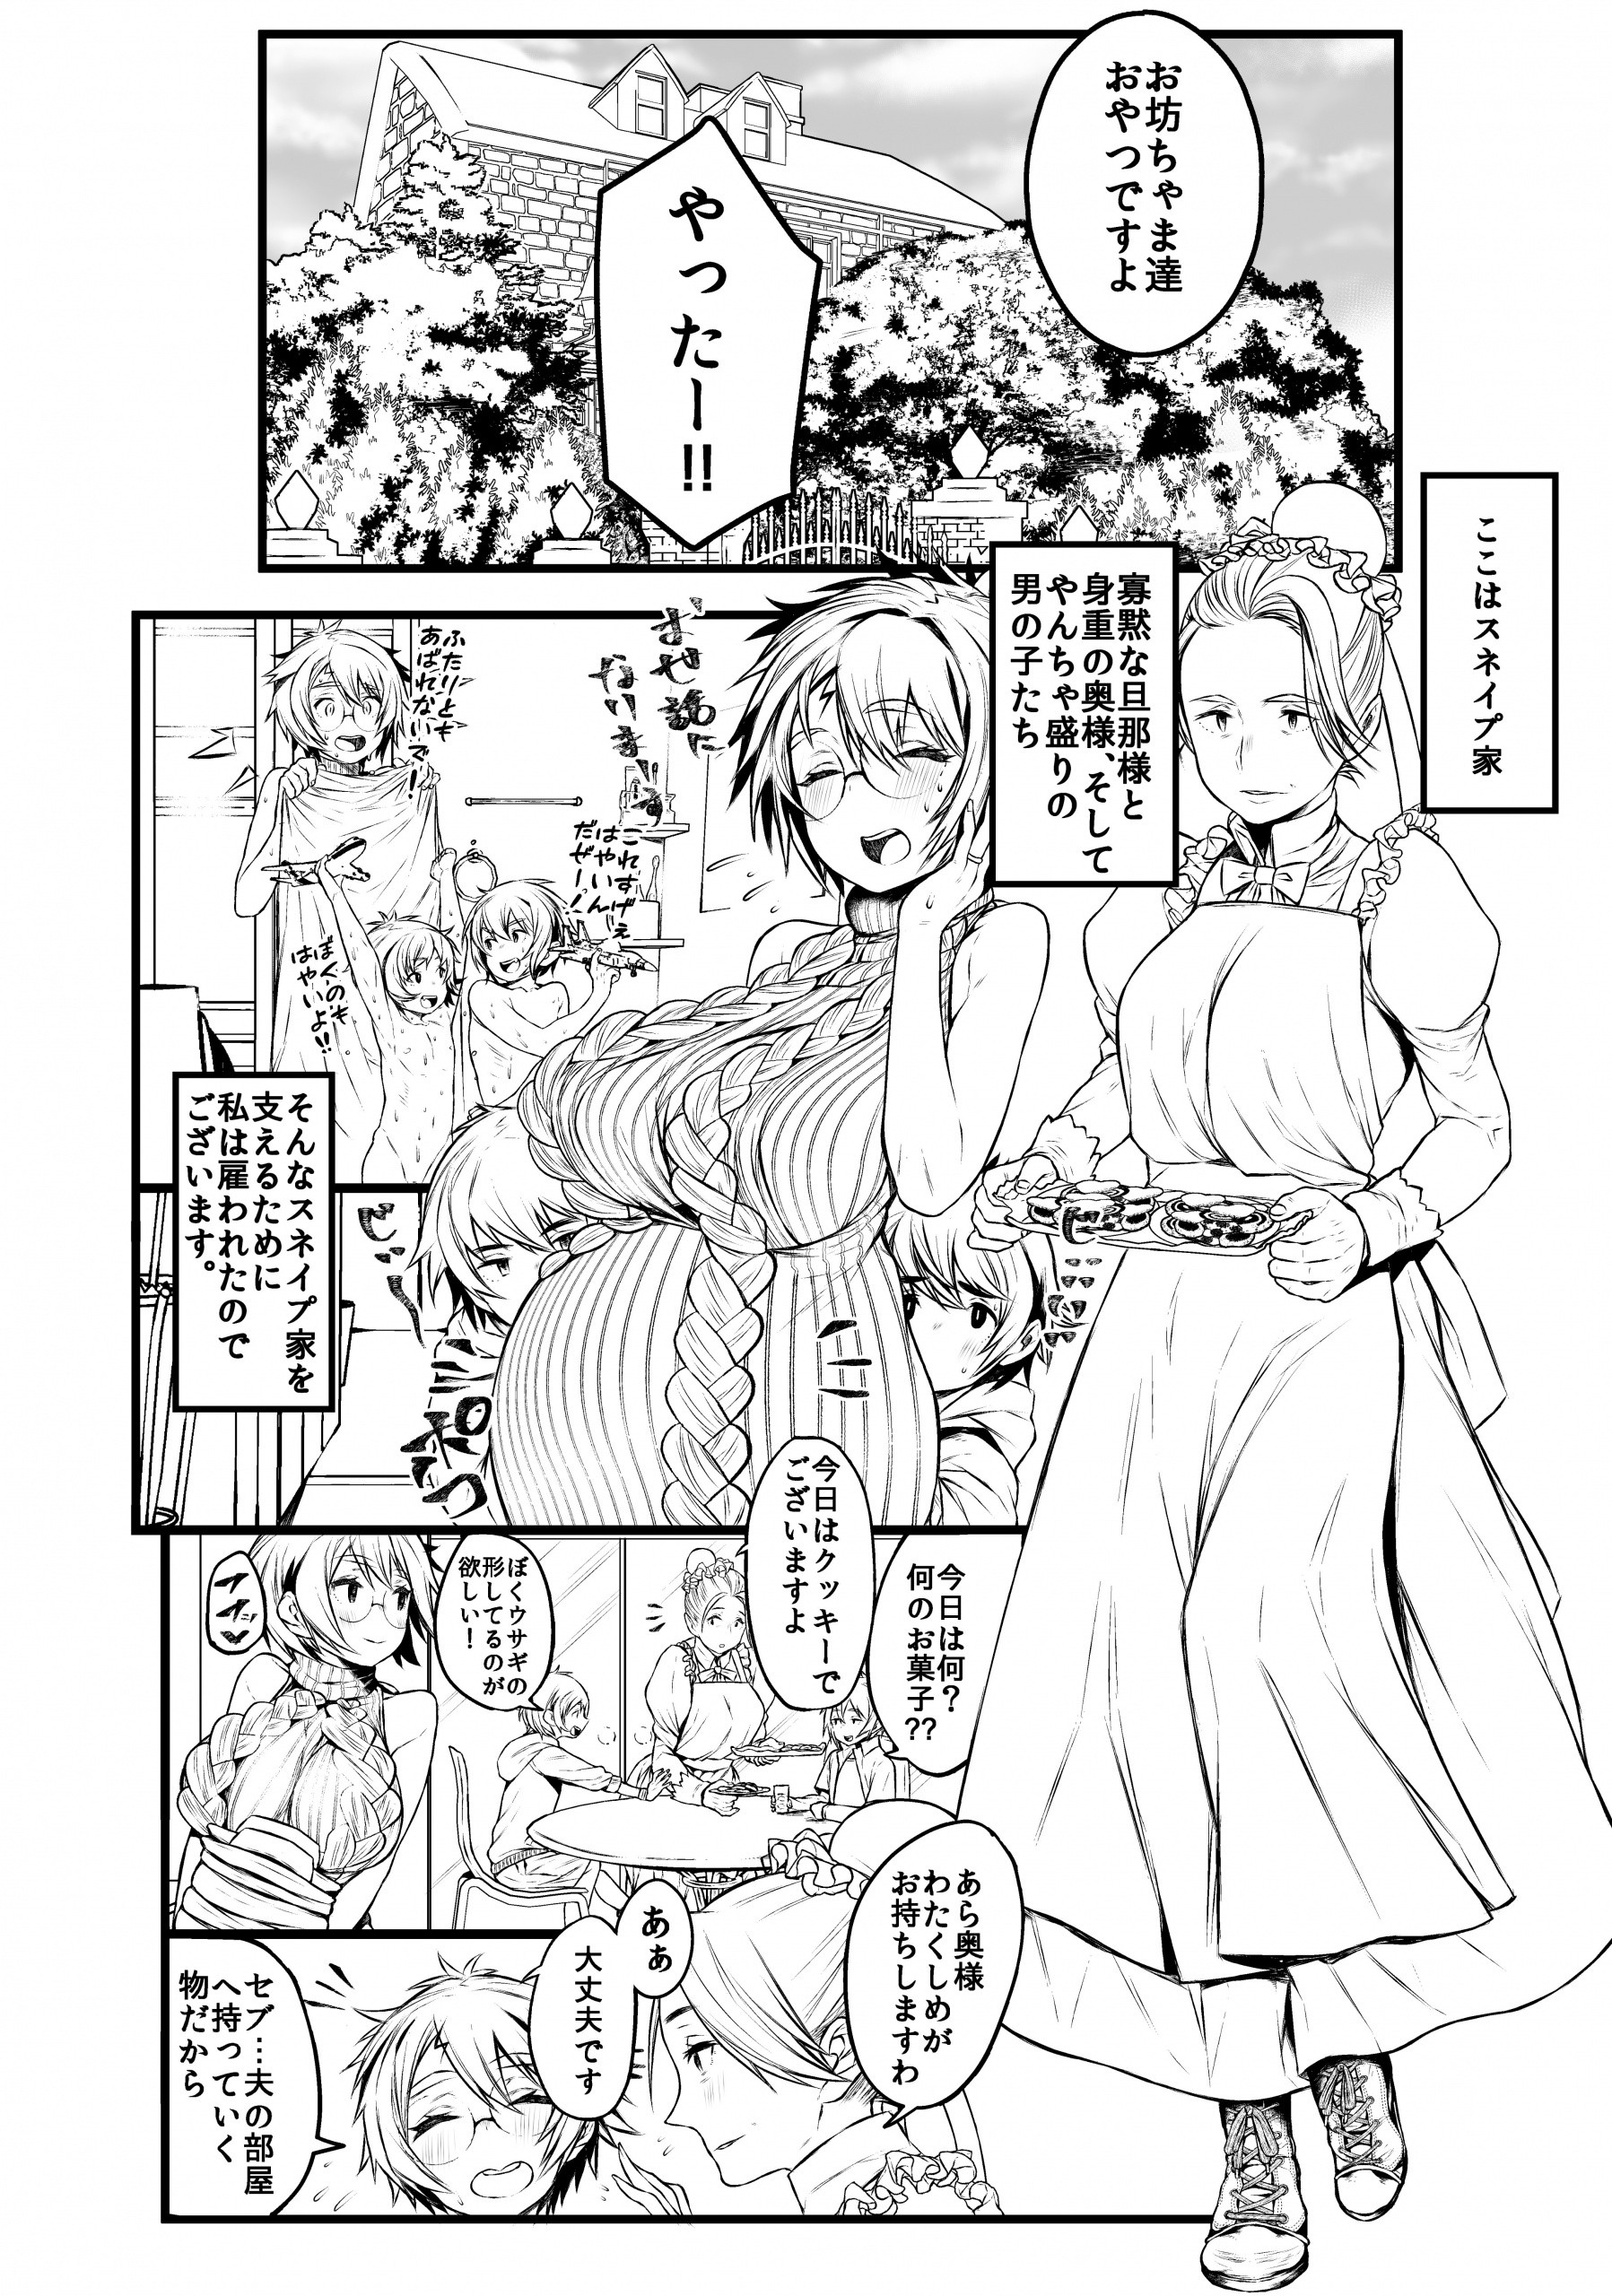 Love's Mycovy Preparation hentai manga picture 37